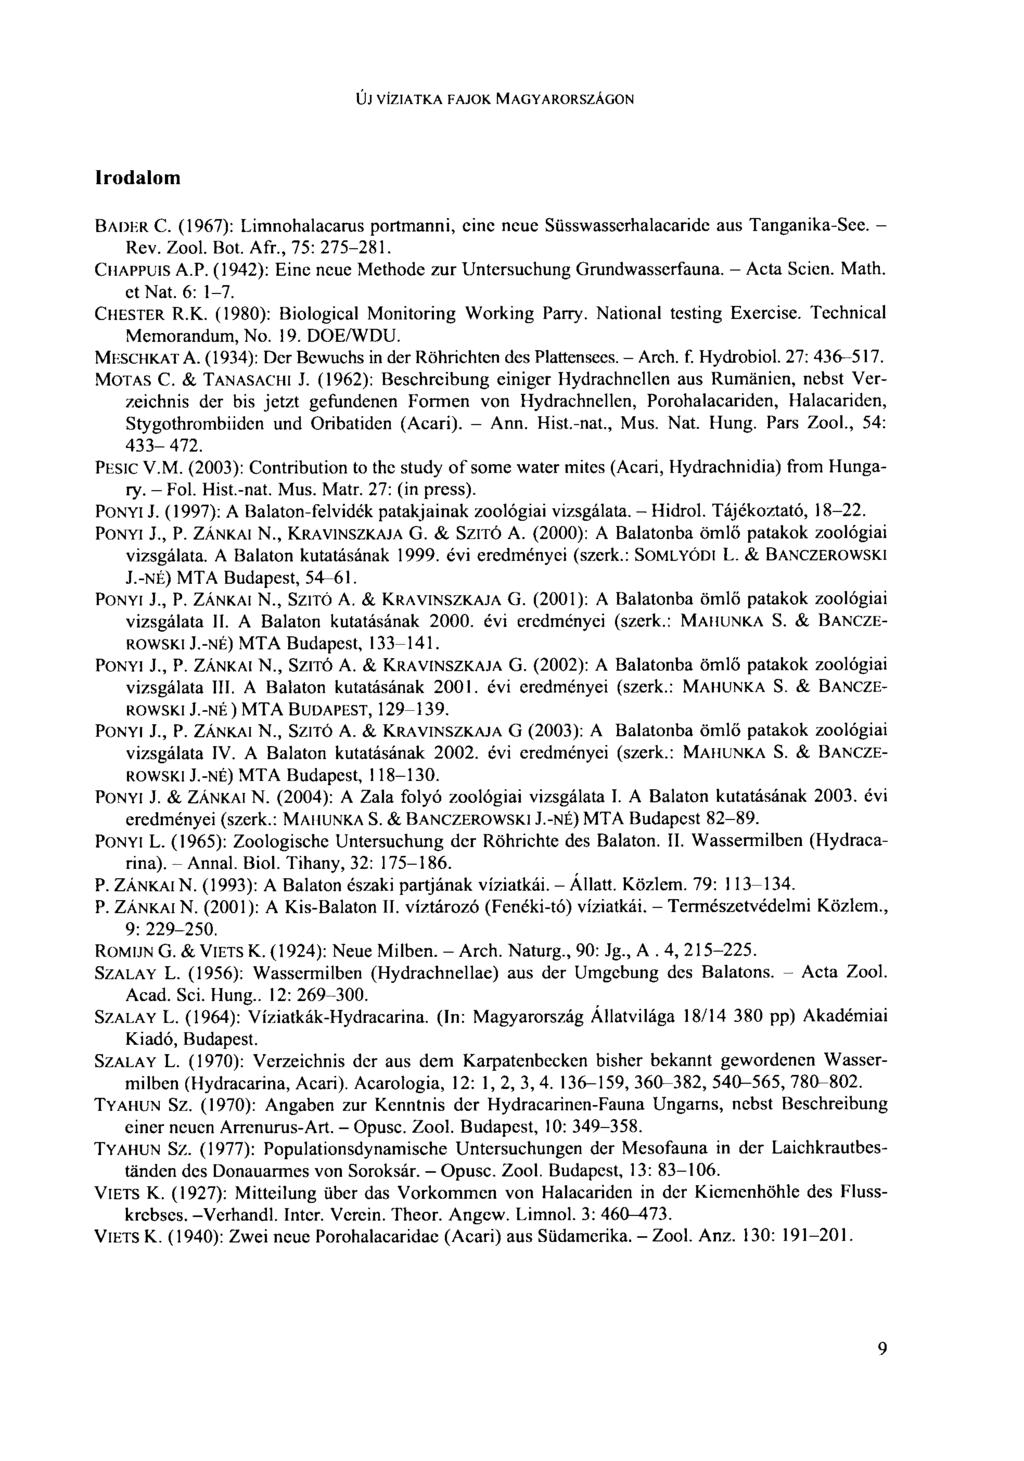 ÚJ VÍZIATKA FAJOK MAGYARORSZÁGON Irodalom BAUER С. (1967): Limnohalacarus portmanni, eine neue Süsswasscrhalacaridc aus Tanganika-See. - Rev. Zool. Bot. Afr., 75: 275-281. CHAPP